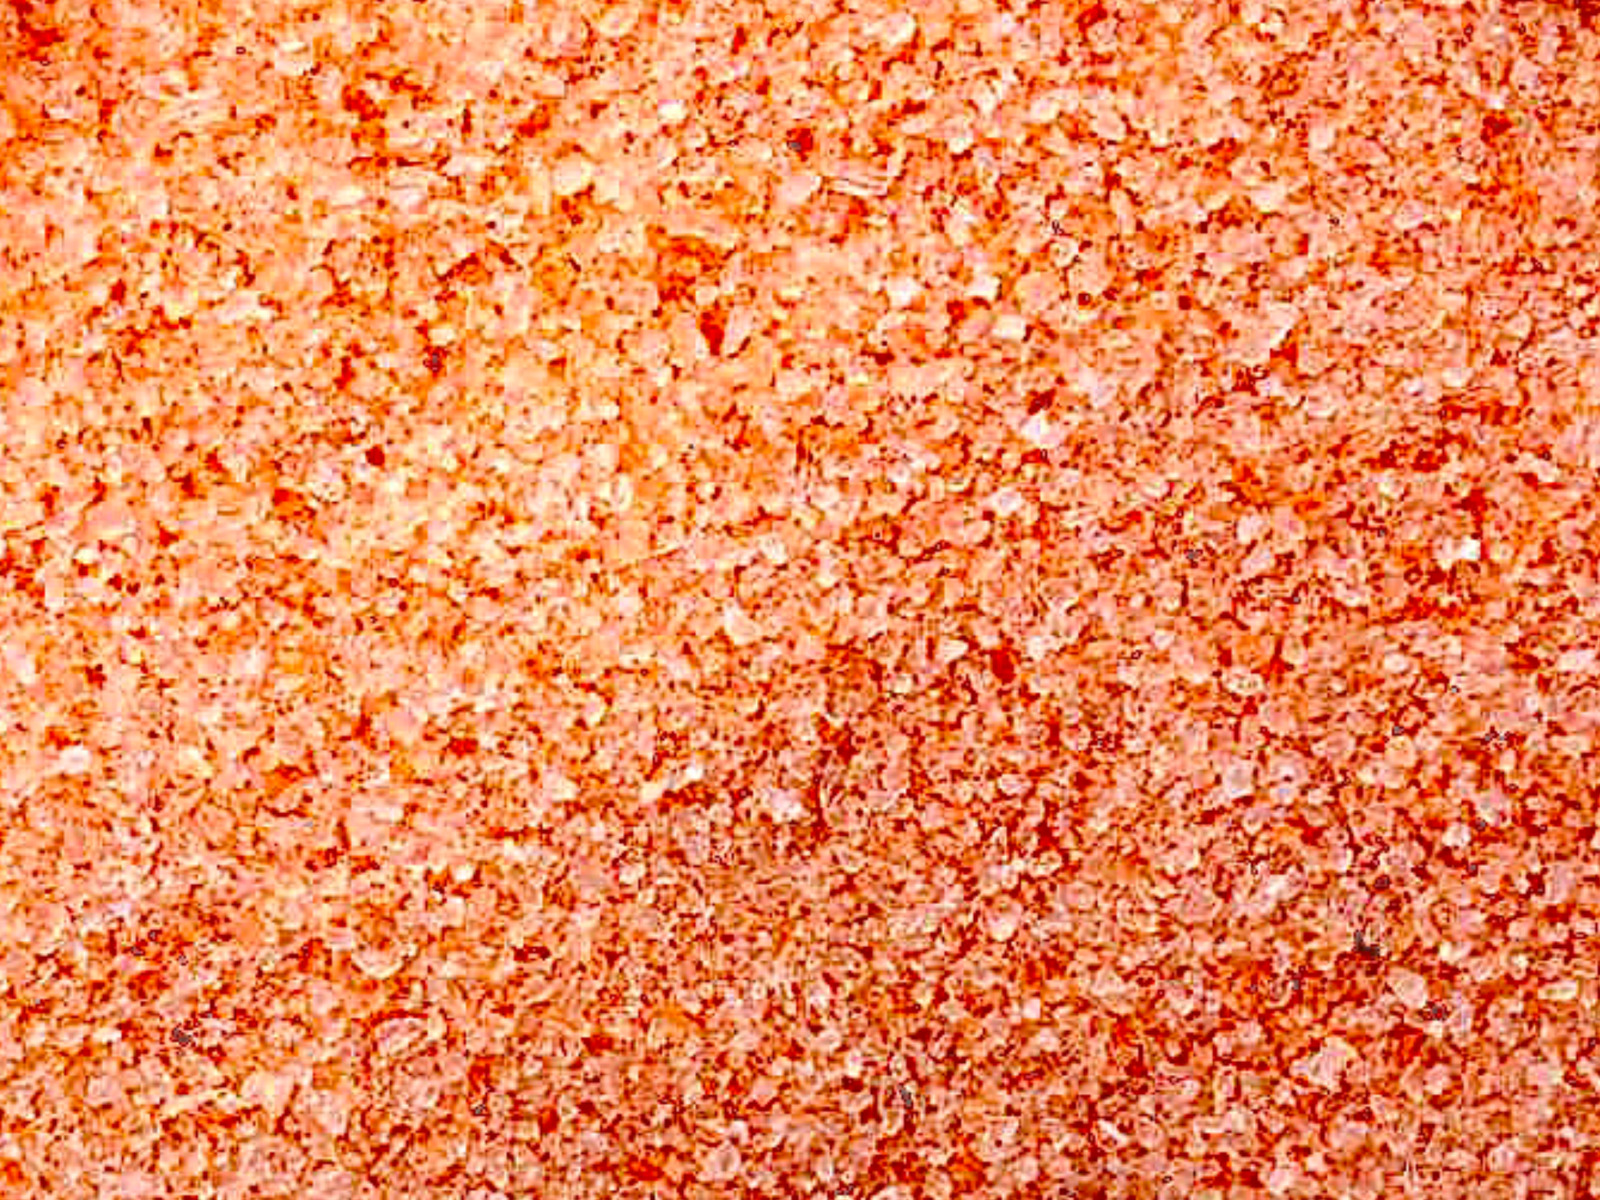 SUPRA ALTERA: (10 lb. Bag) Extra Dark Pink Himalayan Salt, 96+ Trace Minerals